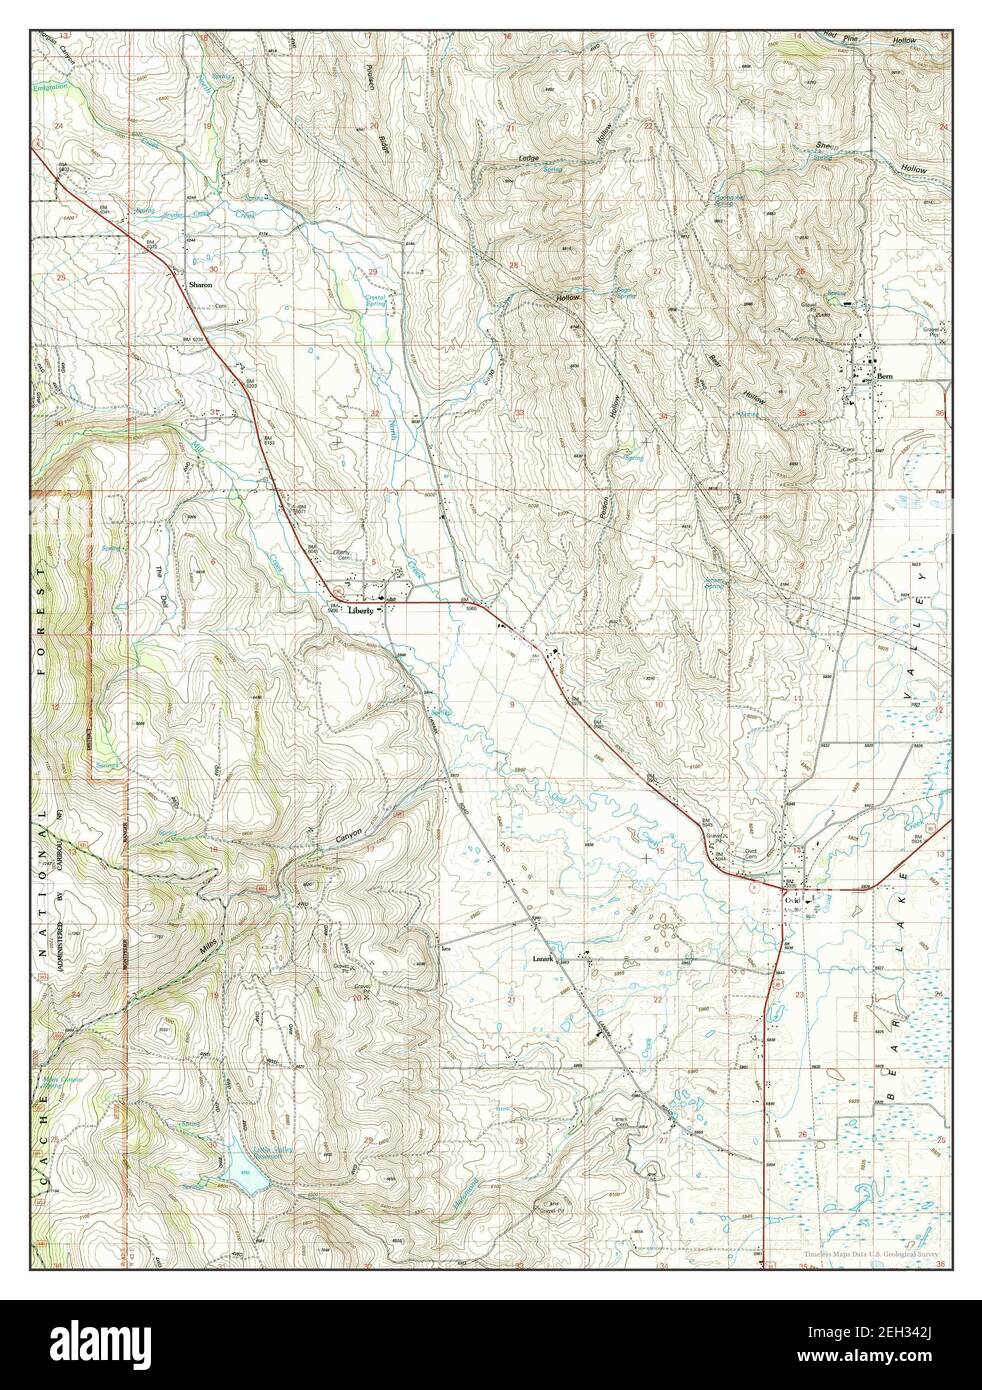 Ovid, Idaho, map 2005, 1:24000, United States of America by Timeless Maps, data U.S. Geological Survey Stock Photo